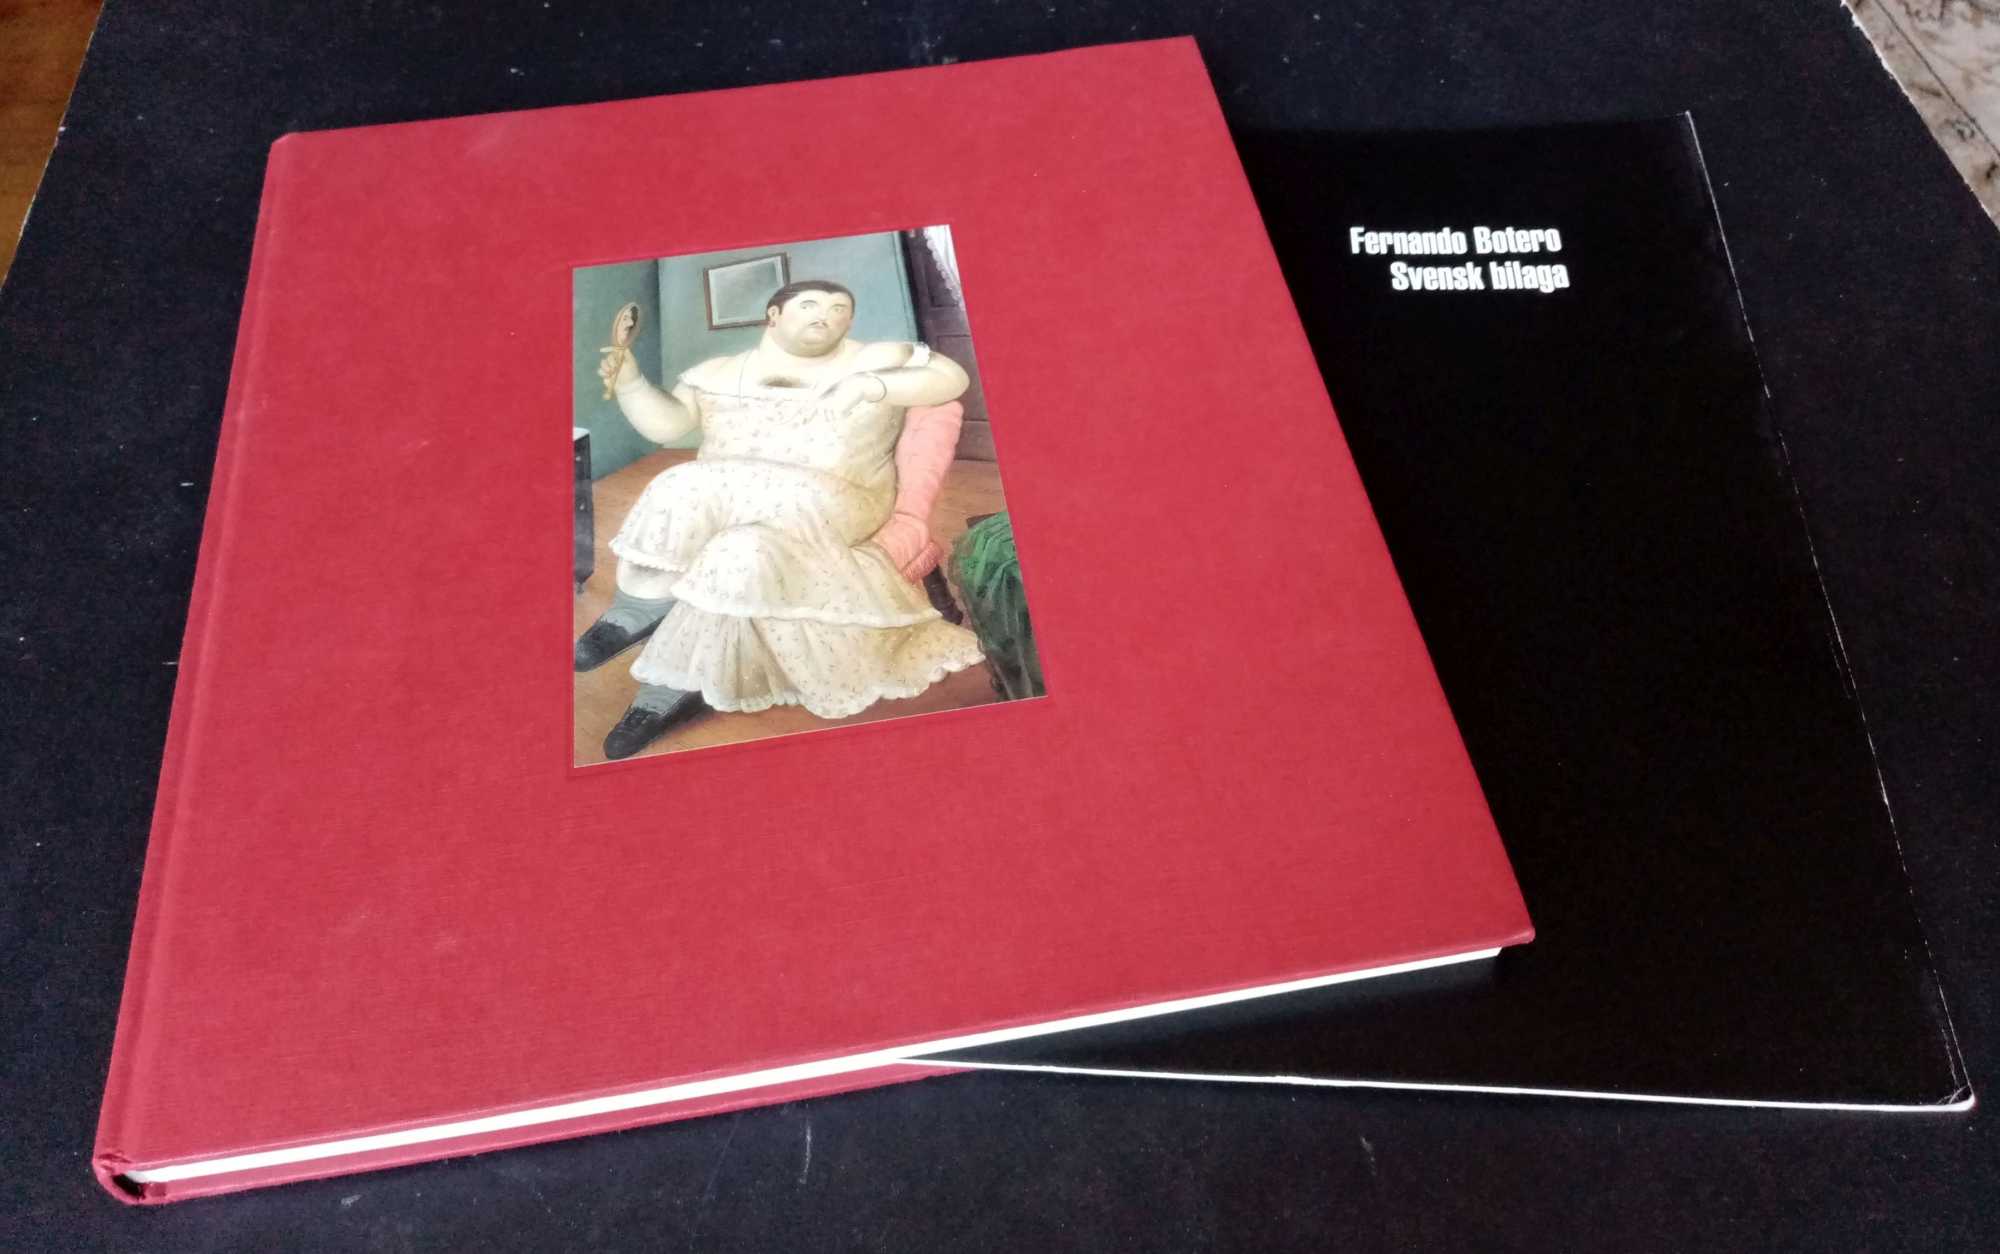 David Elliott, ed. - The enigma of Fernando Botero